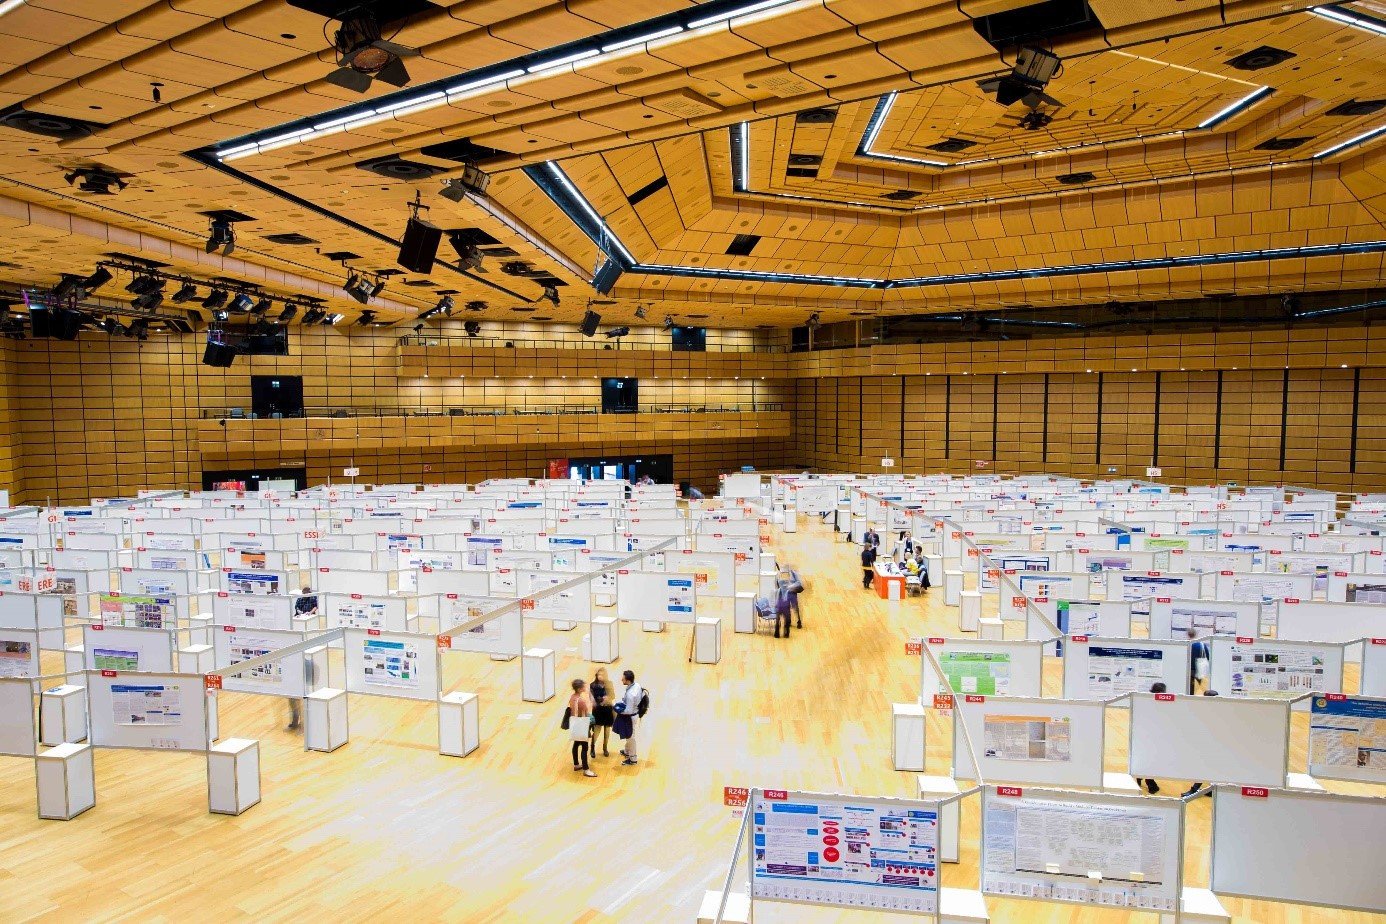 “European Geosciences Union (EGU) Congress” was held in Vienna, Austria